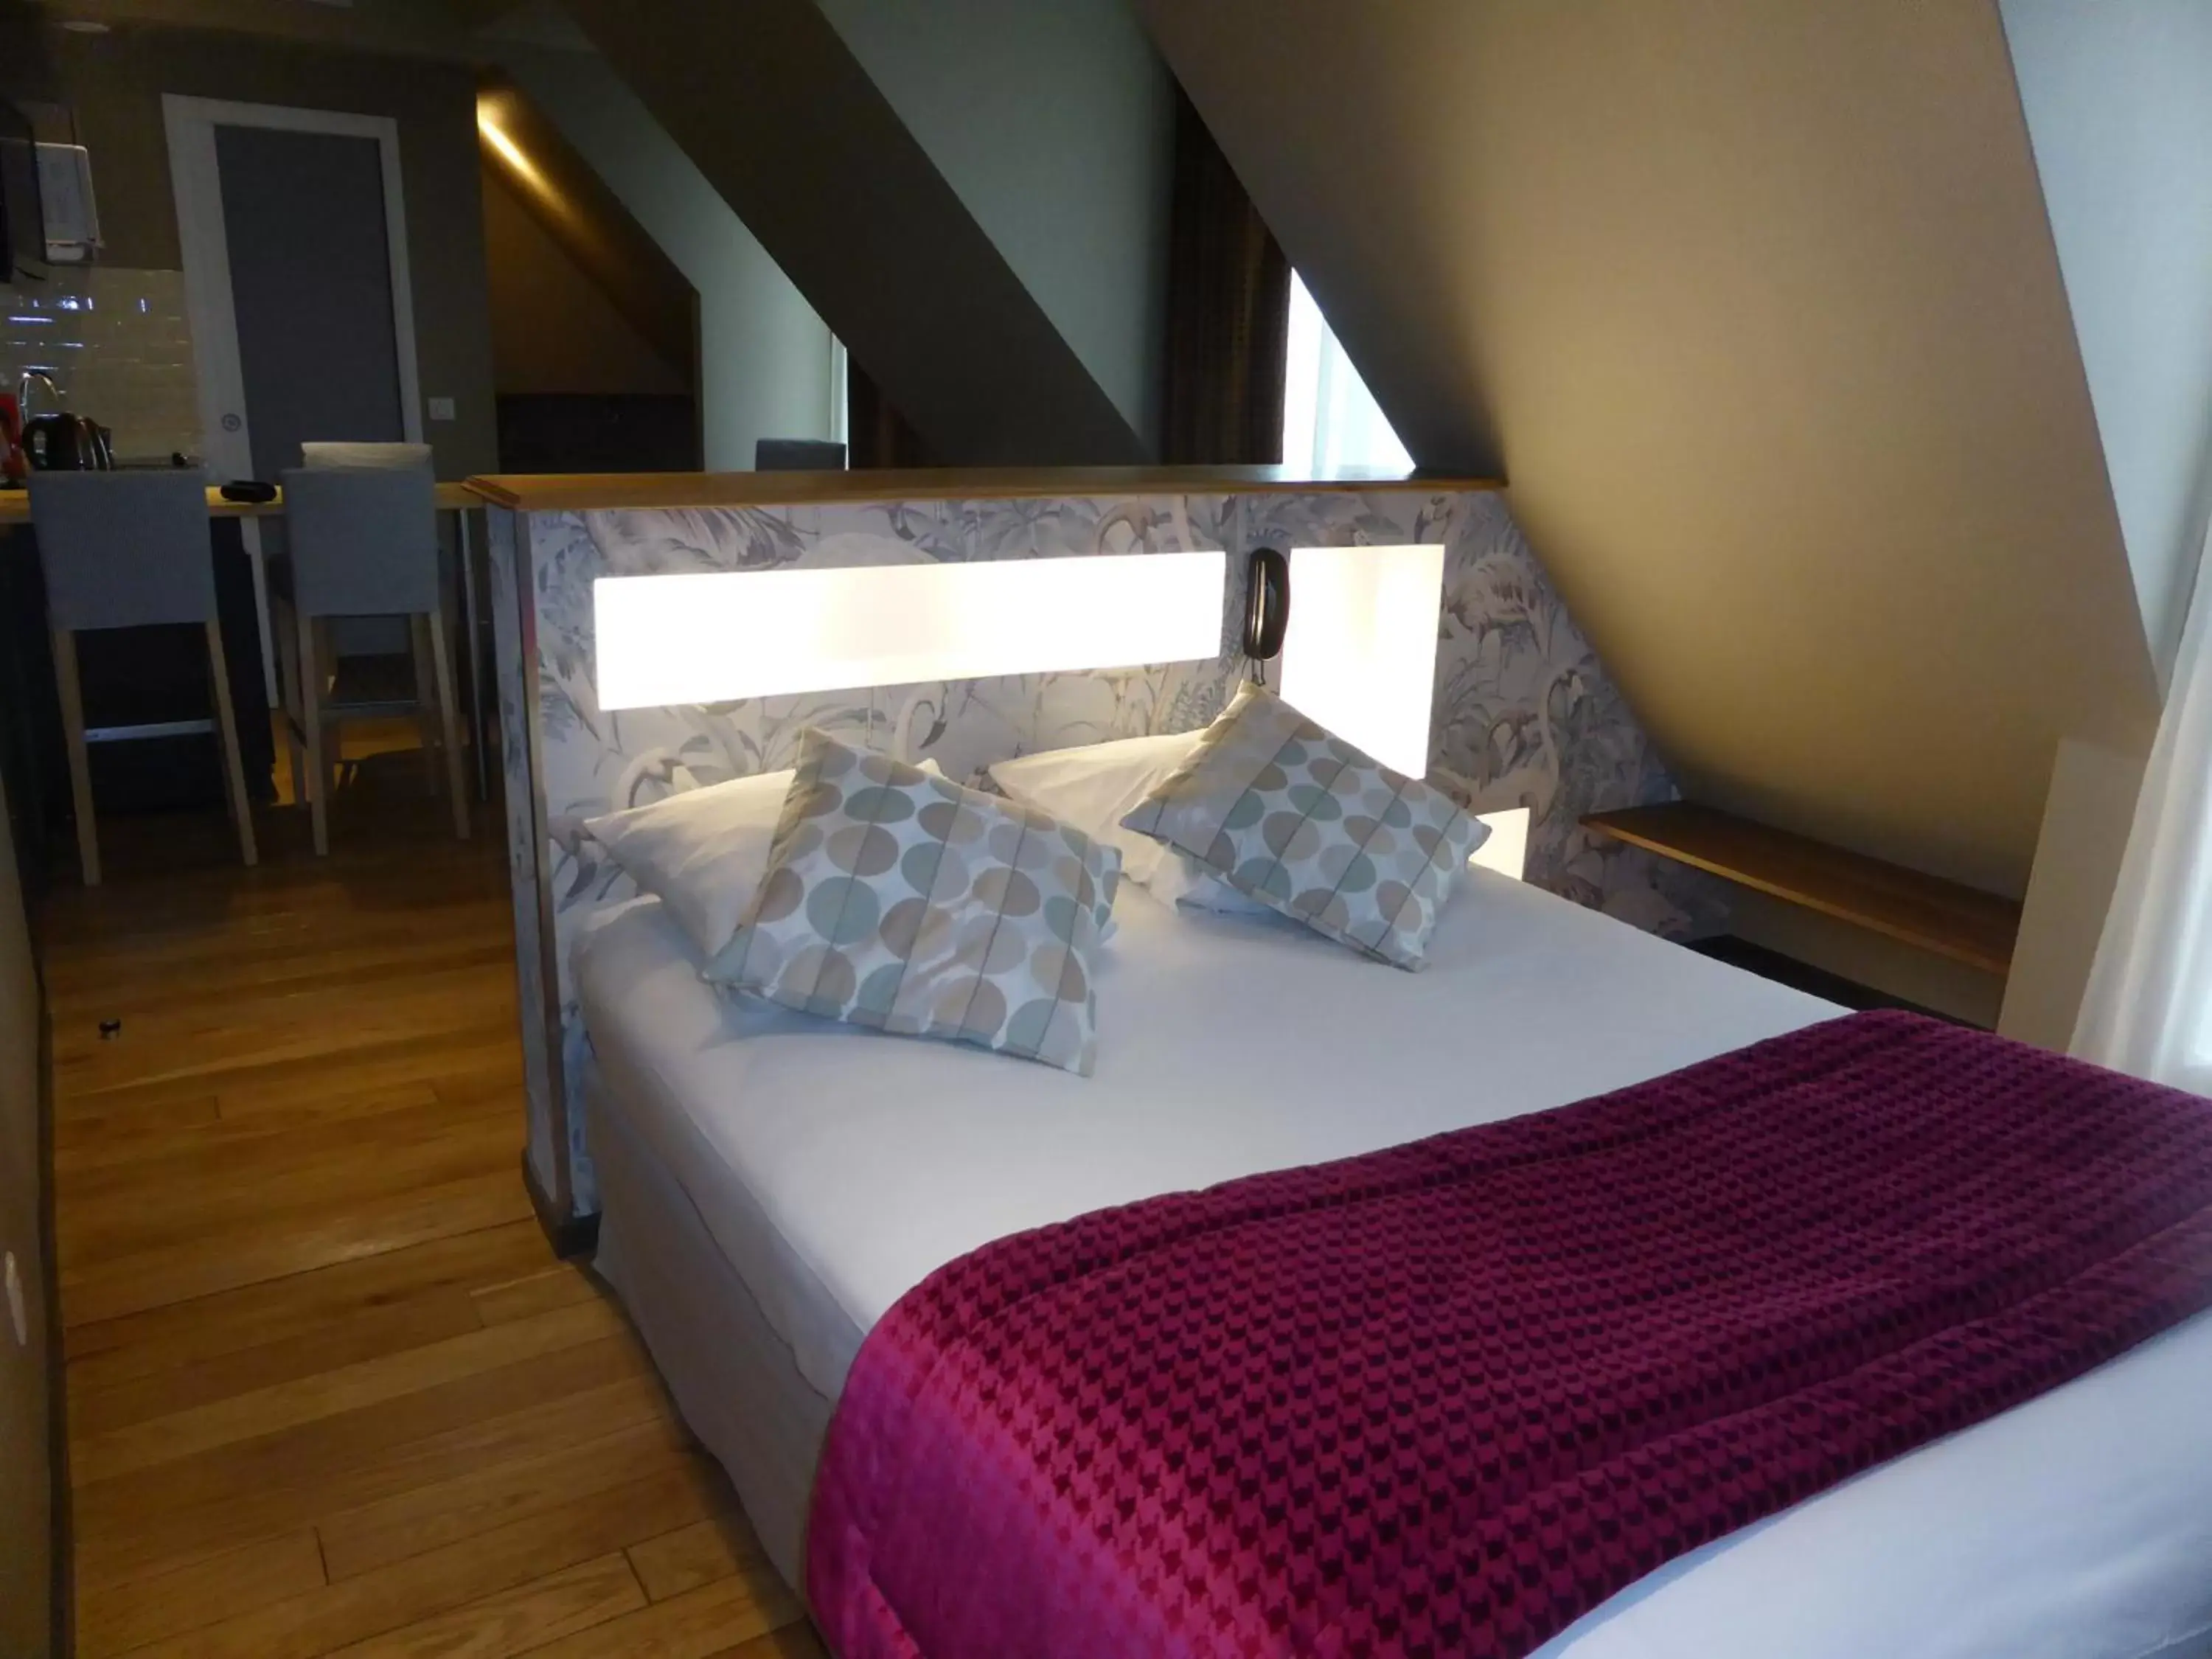 Bed, Room Photo in Excelsior Batignolles